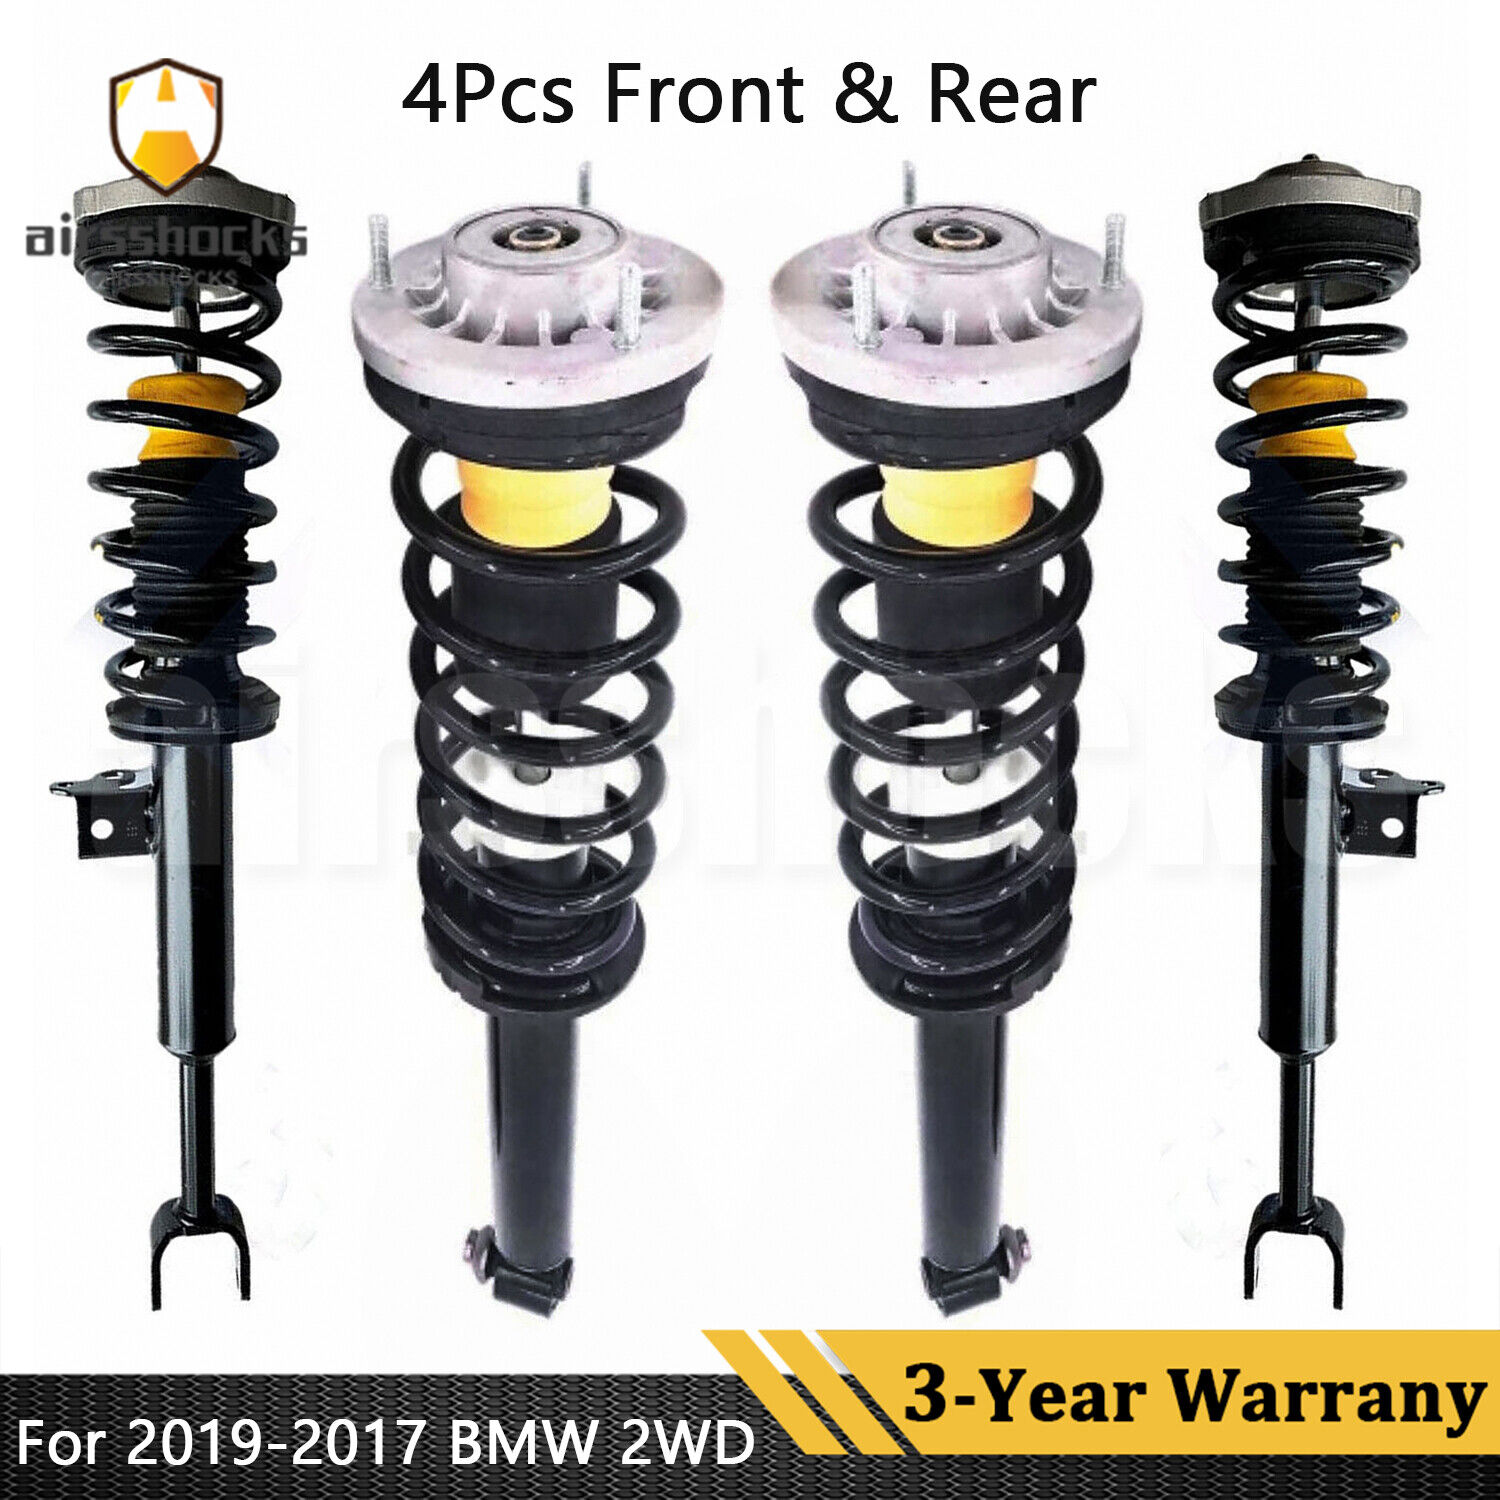 4pcs Front Rear Shock Struts Assembly For BMW F06 F10 F11 F12 528i 535i 550i 2WD